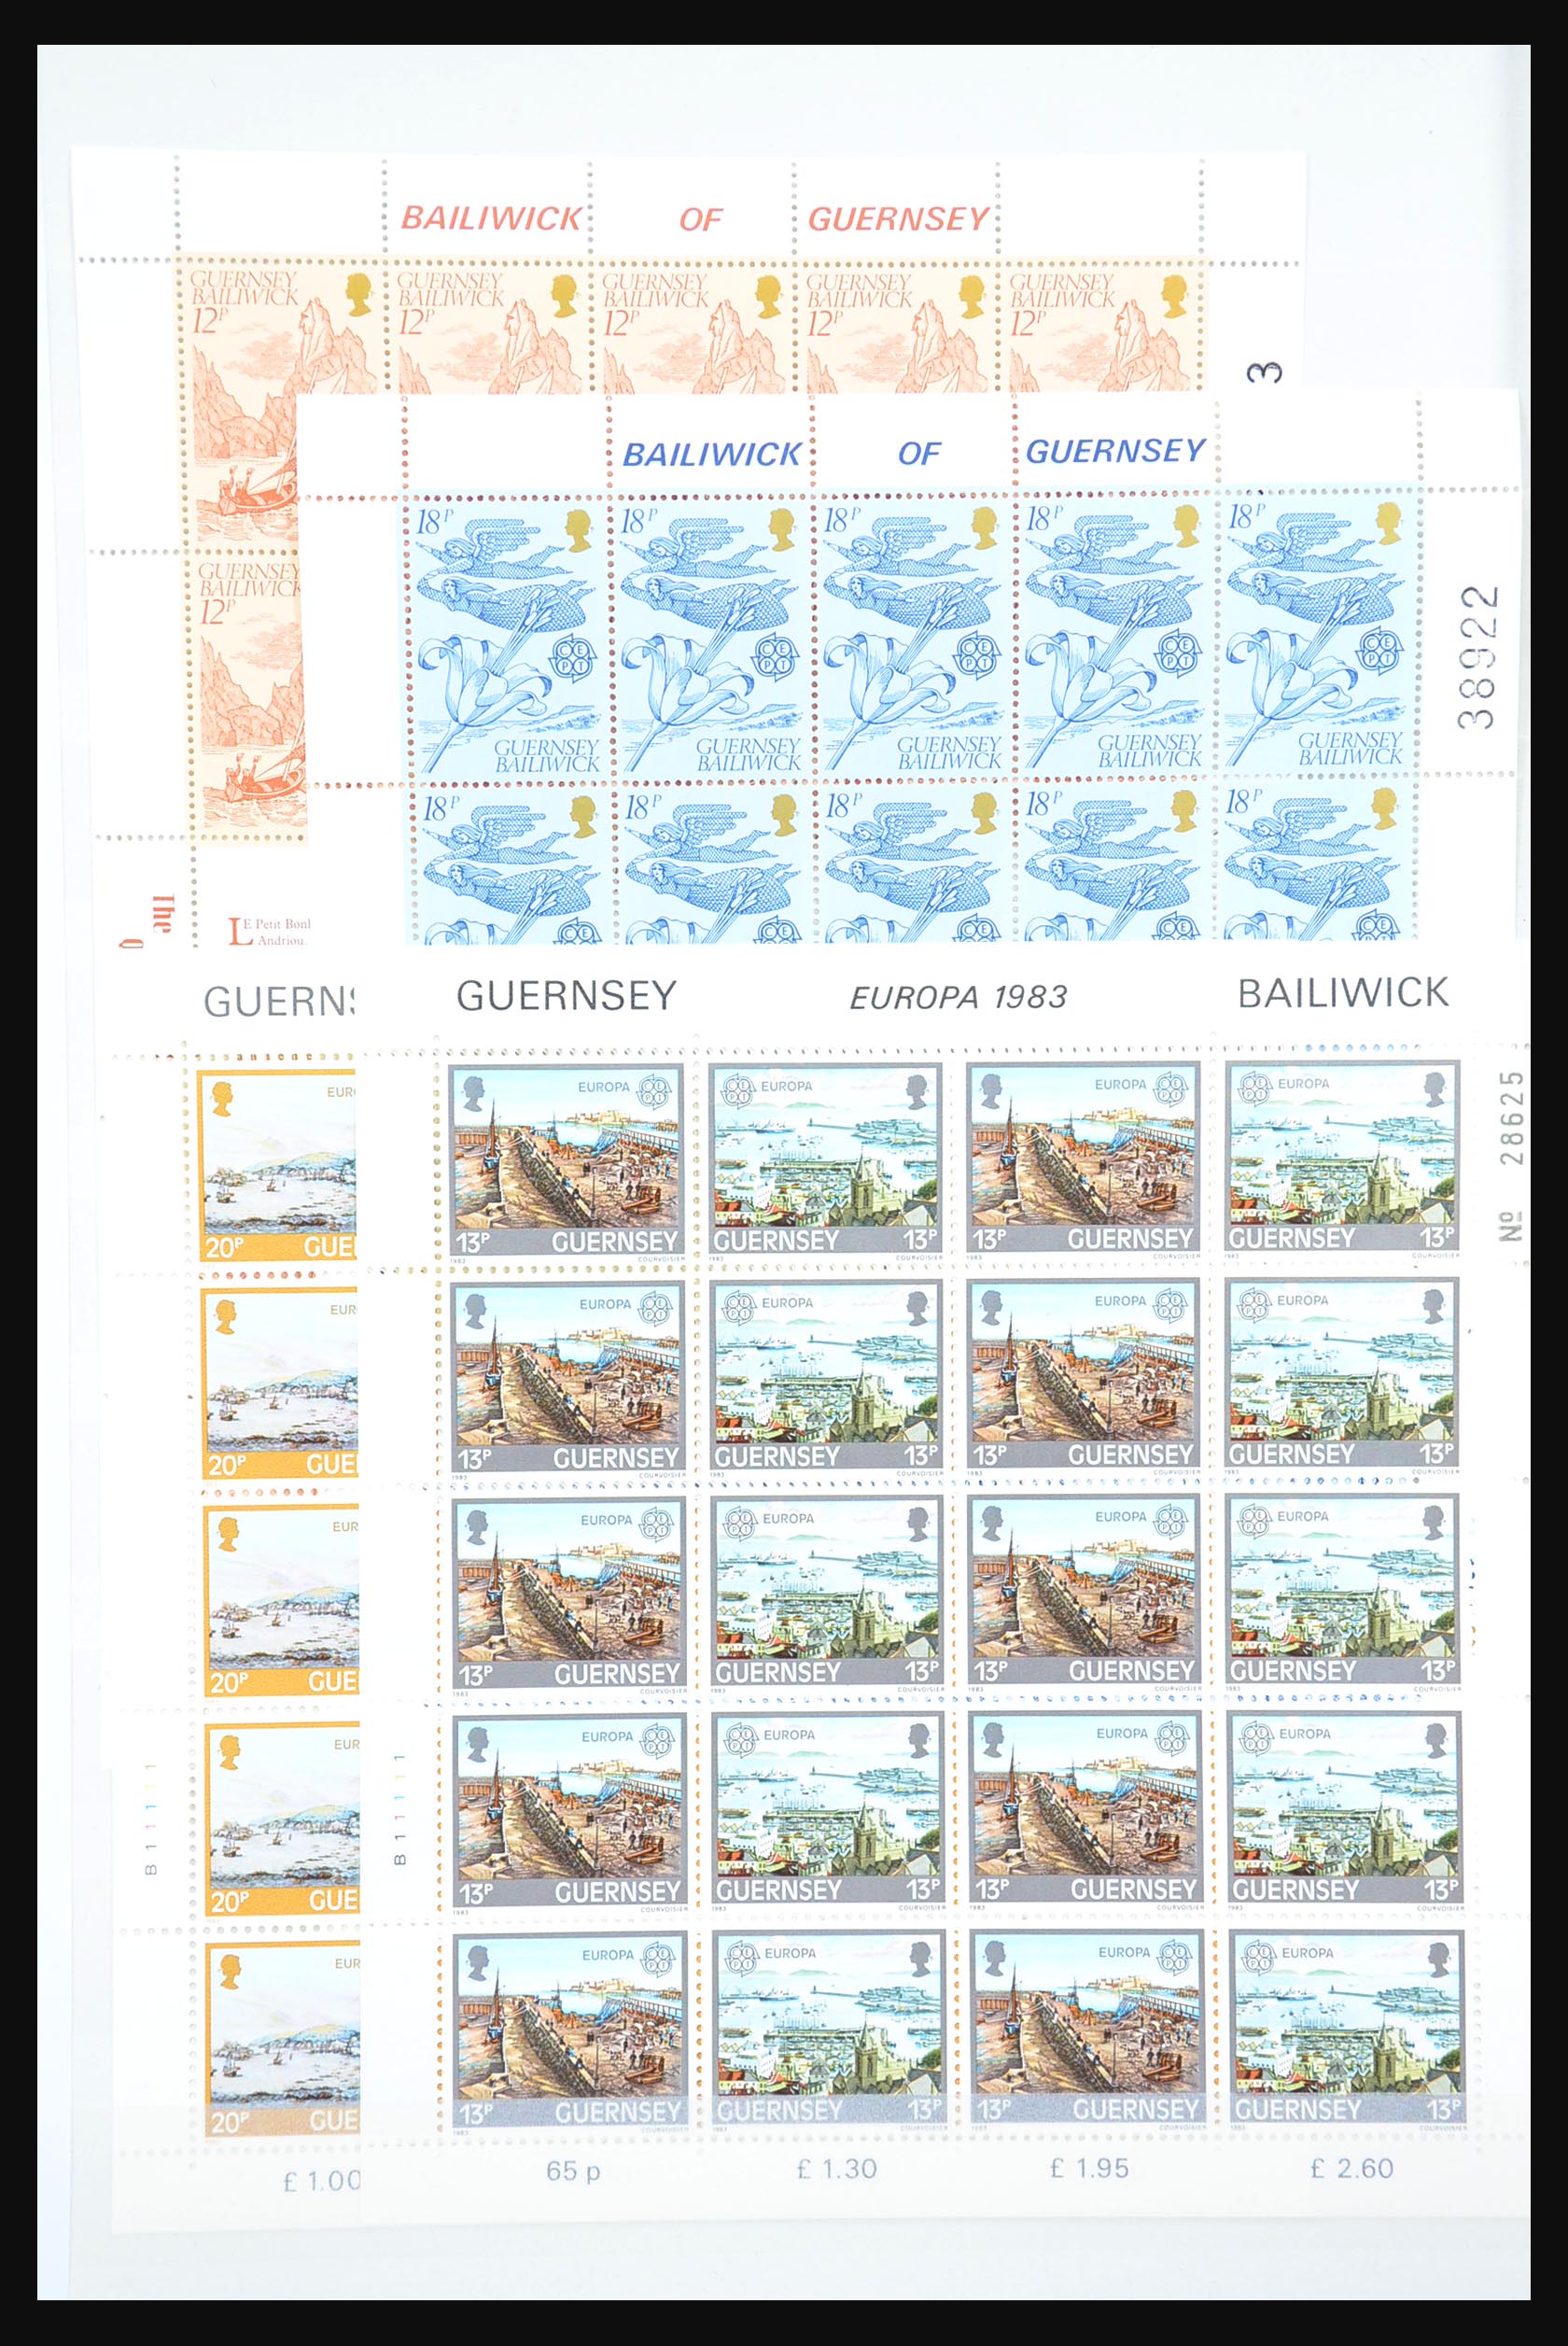 31249 022 - 31249 Channel Islands souvenir sheets and sheetlets 1978-1997.